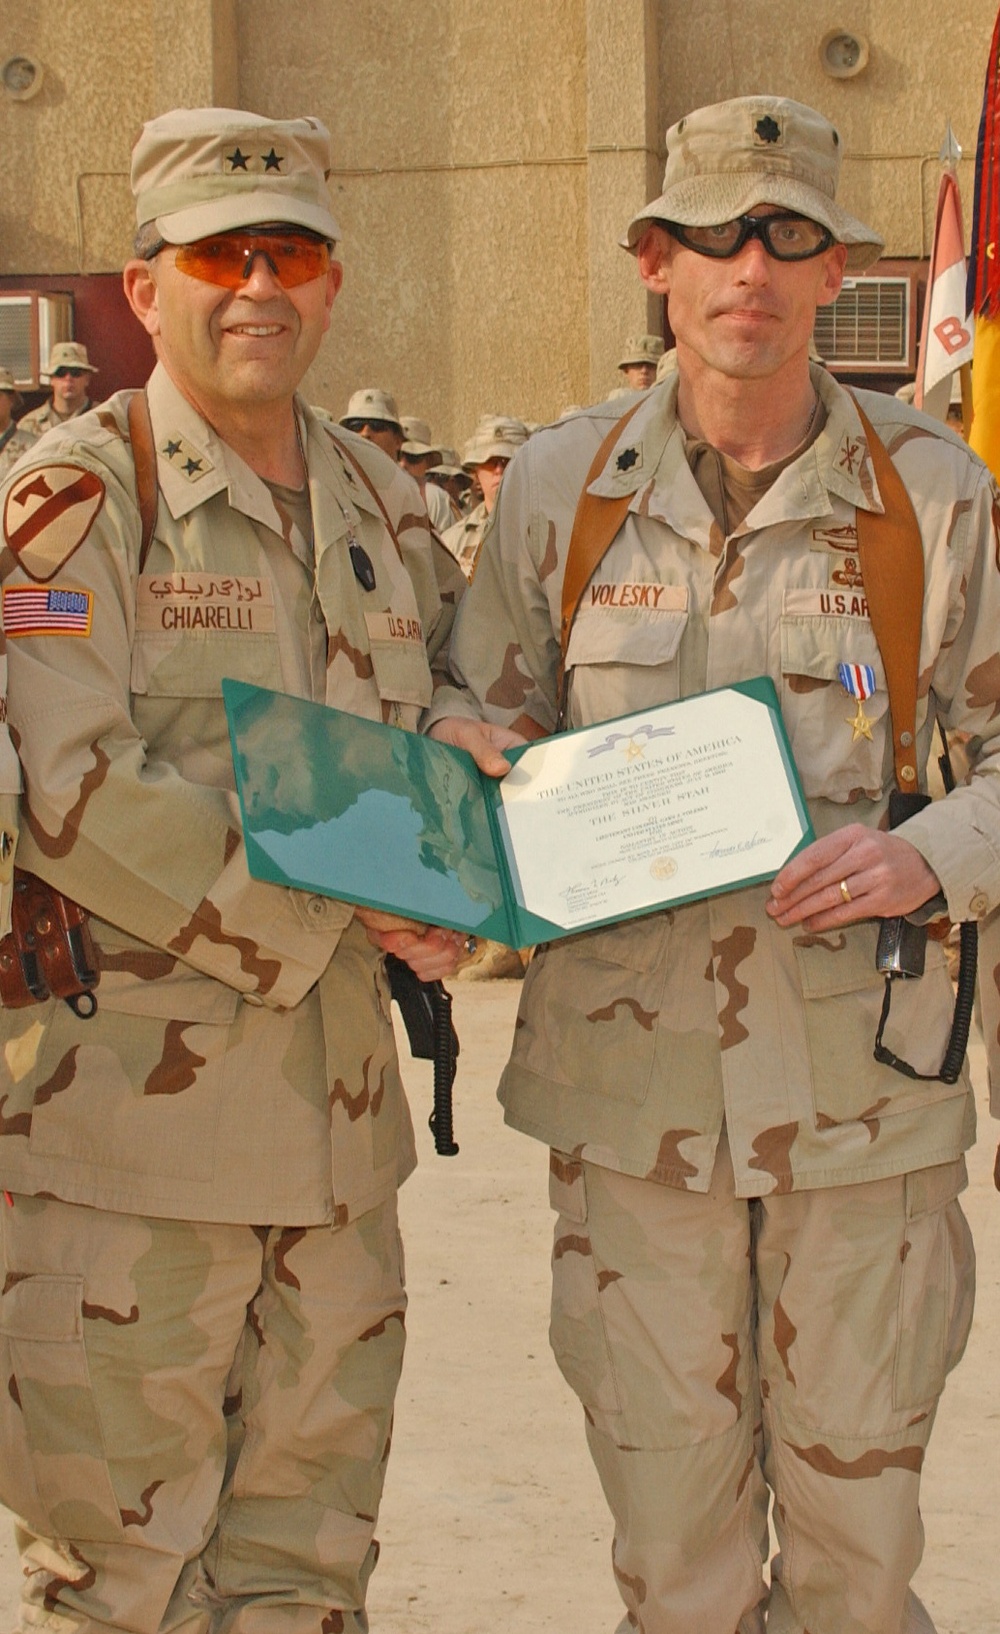 Lt. Col Volesky is congratulated by Maj. Gen. Peter Chiarelli